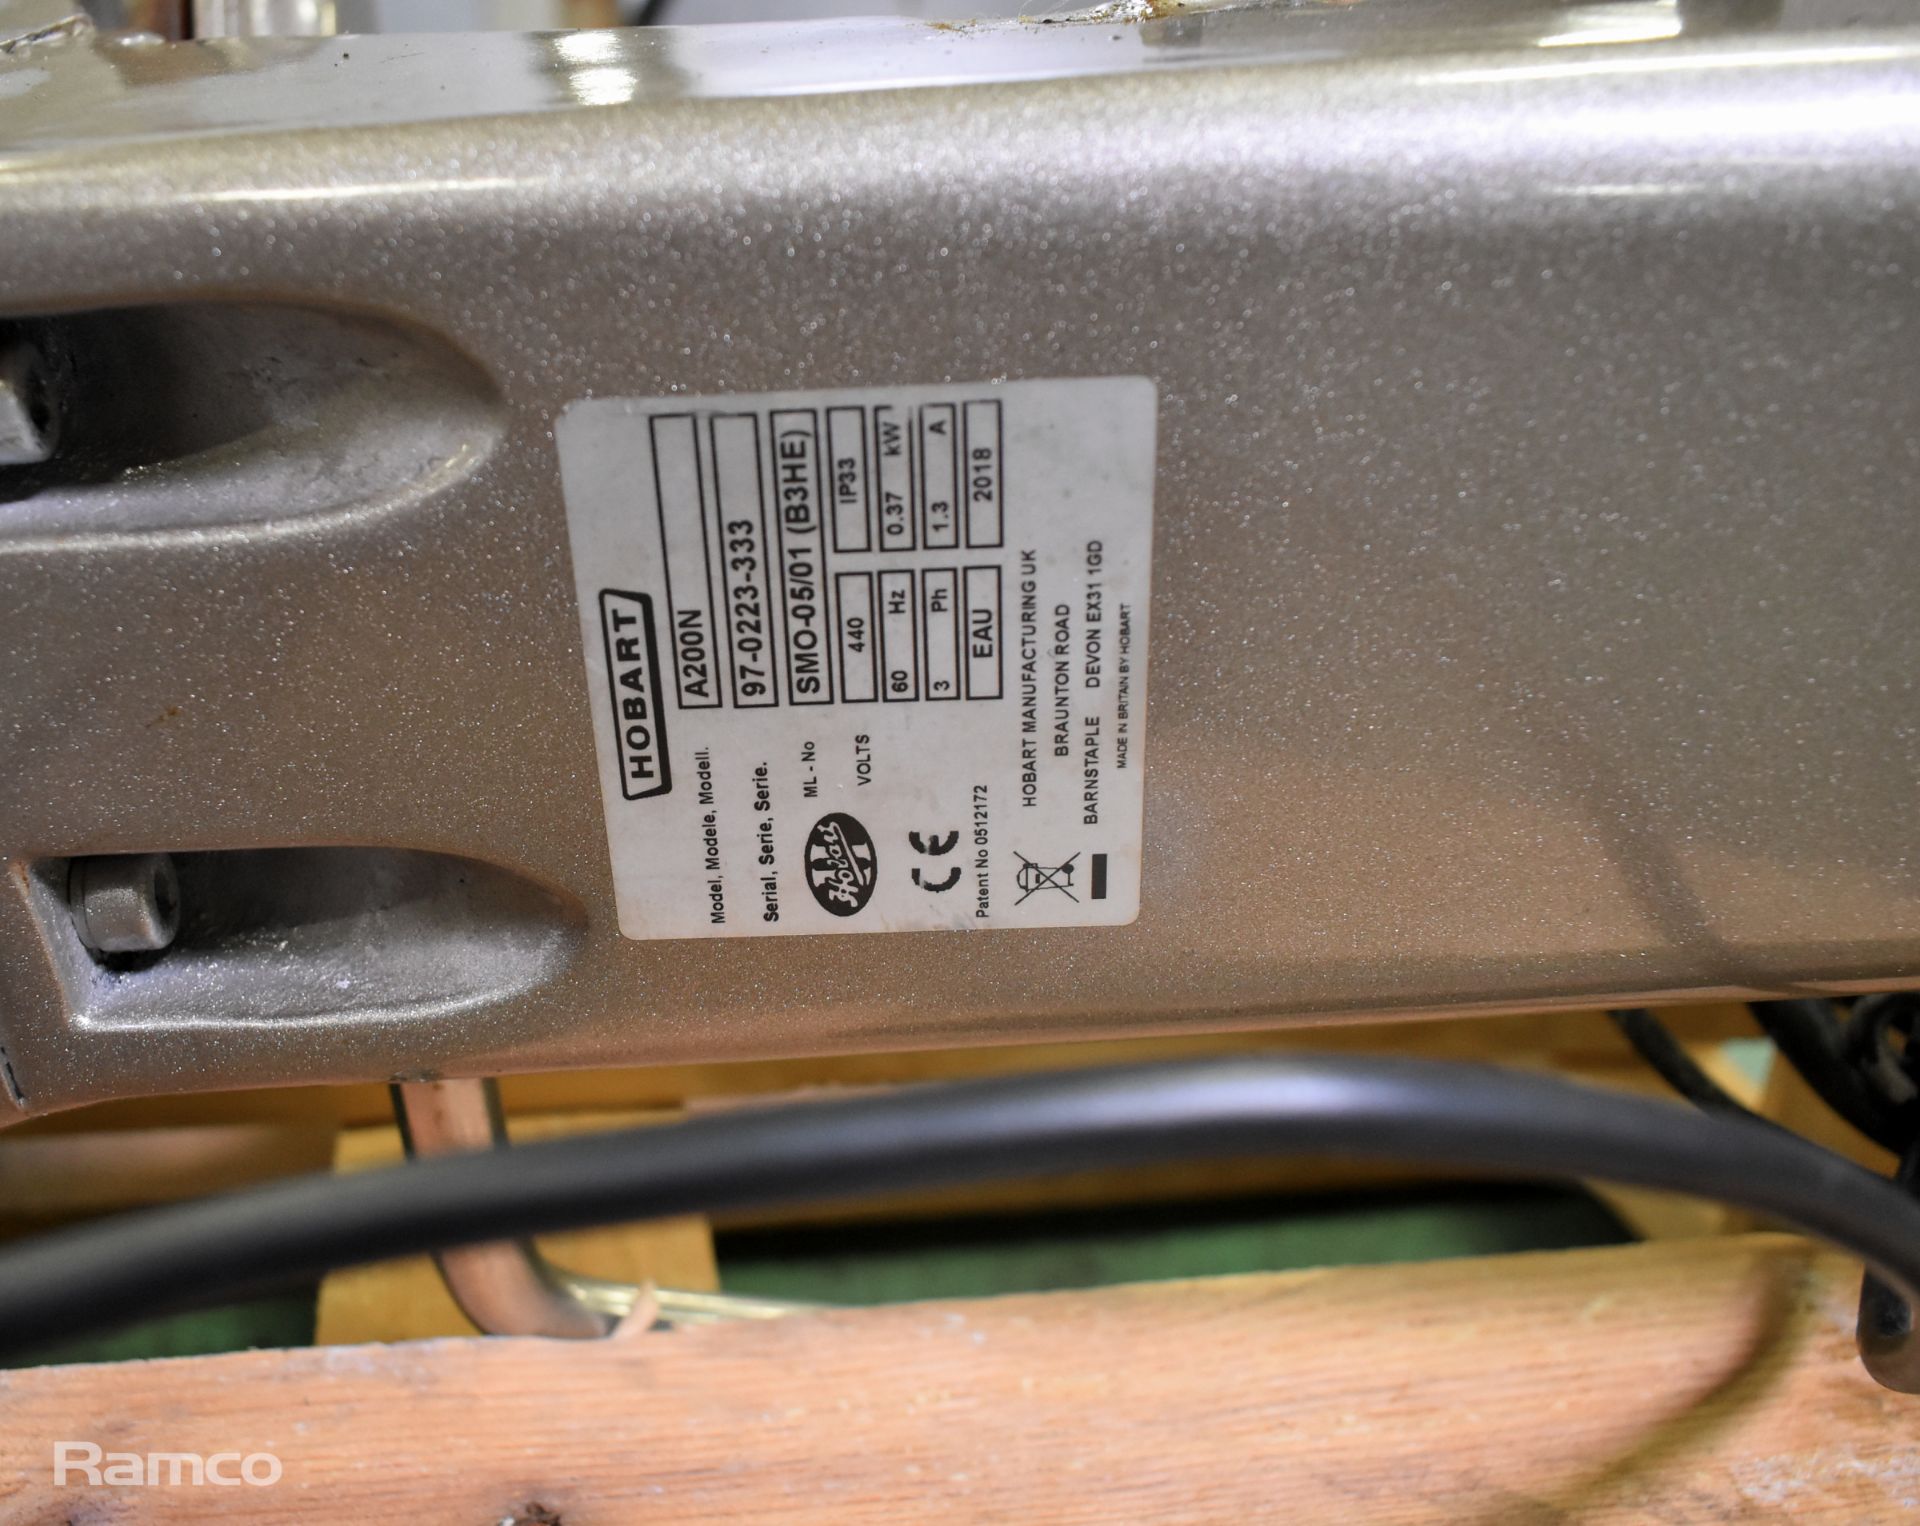 Hobart A200N 20L bench mixer - W 460 x D 560 x H 780mm - MISSING BOWL - NO ATTACHMENTS - Image 4 of 5